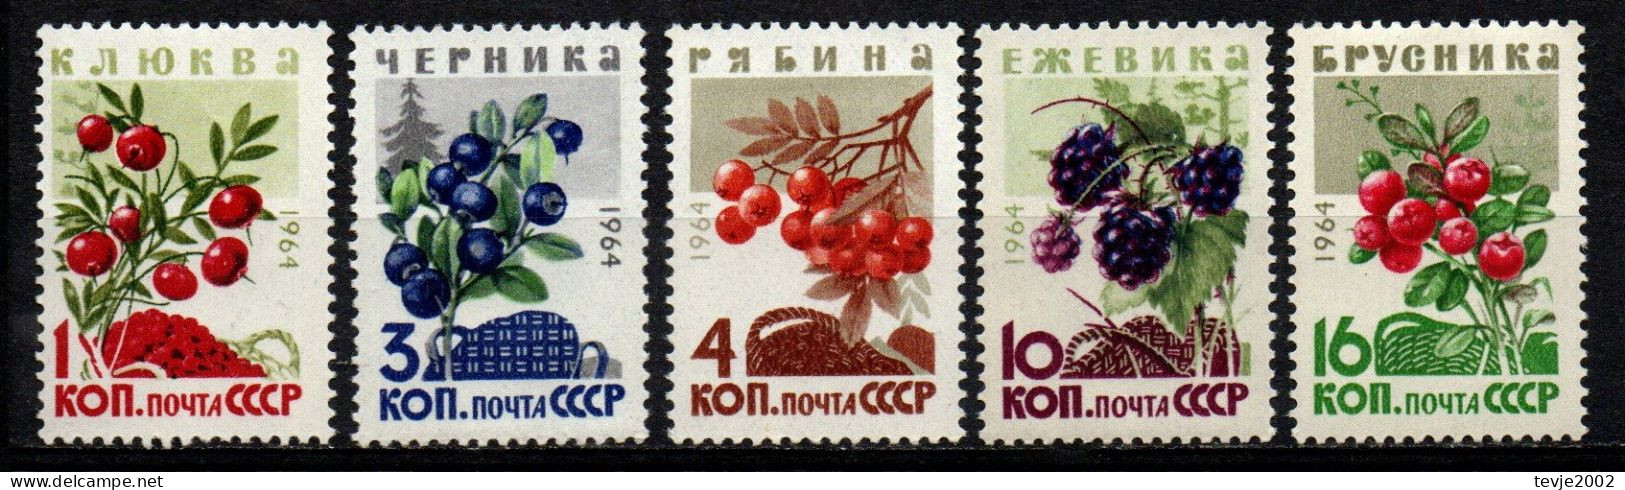 Sowjetunion UdSSR CCCP 1964 - Mi.Nr. 2996 - 3000 - Postfrisch MNH - Früchte Obst Fruits Beeren Berries - Fruits